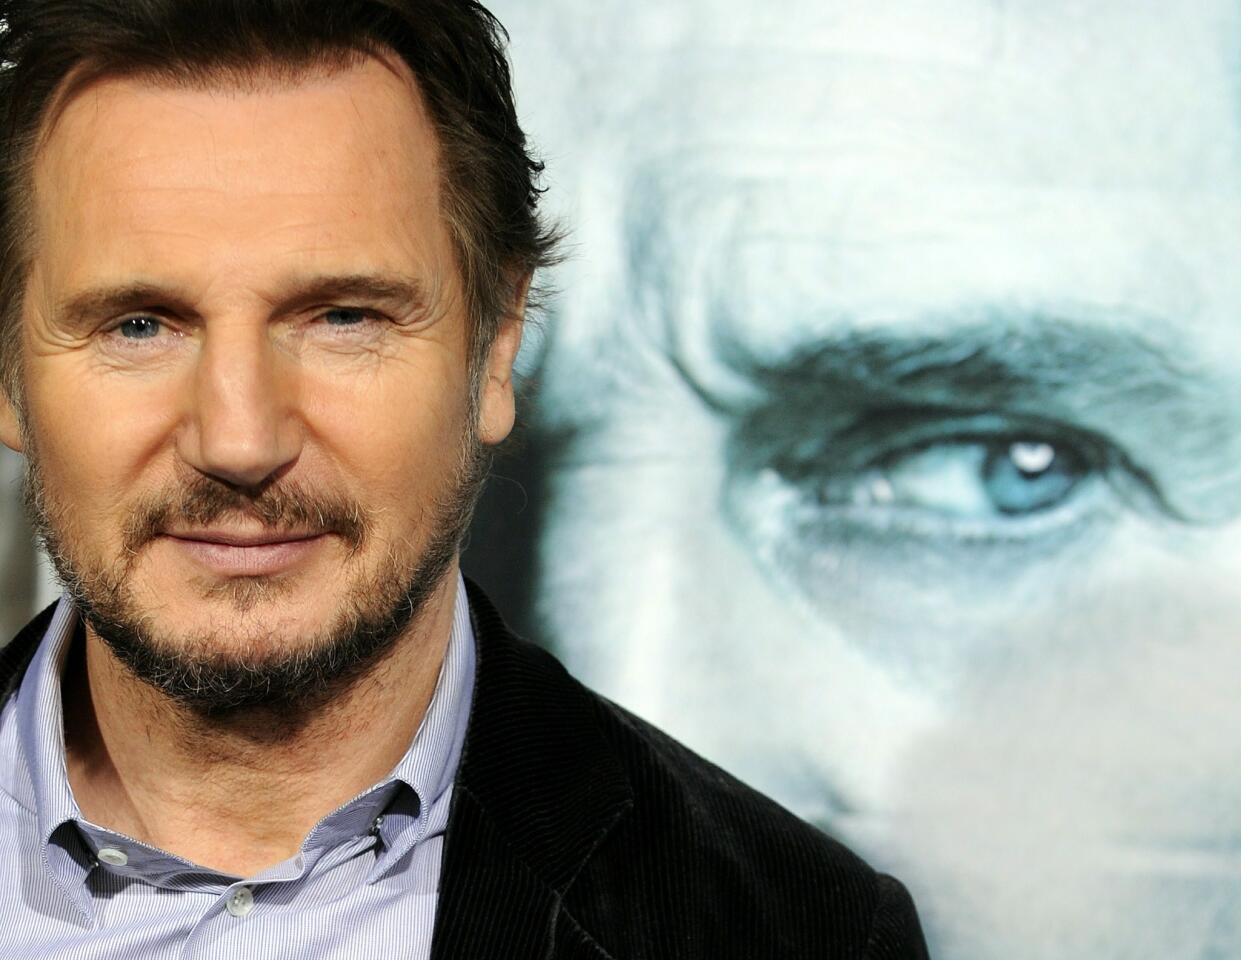 10. Liam Neeson